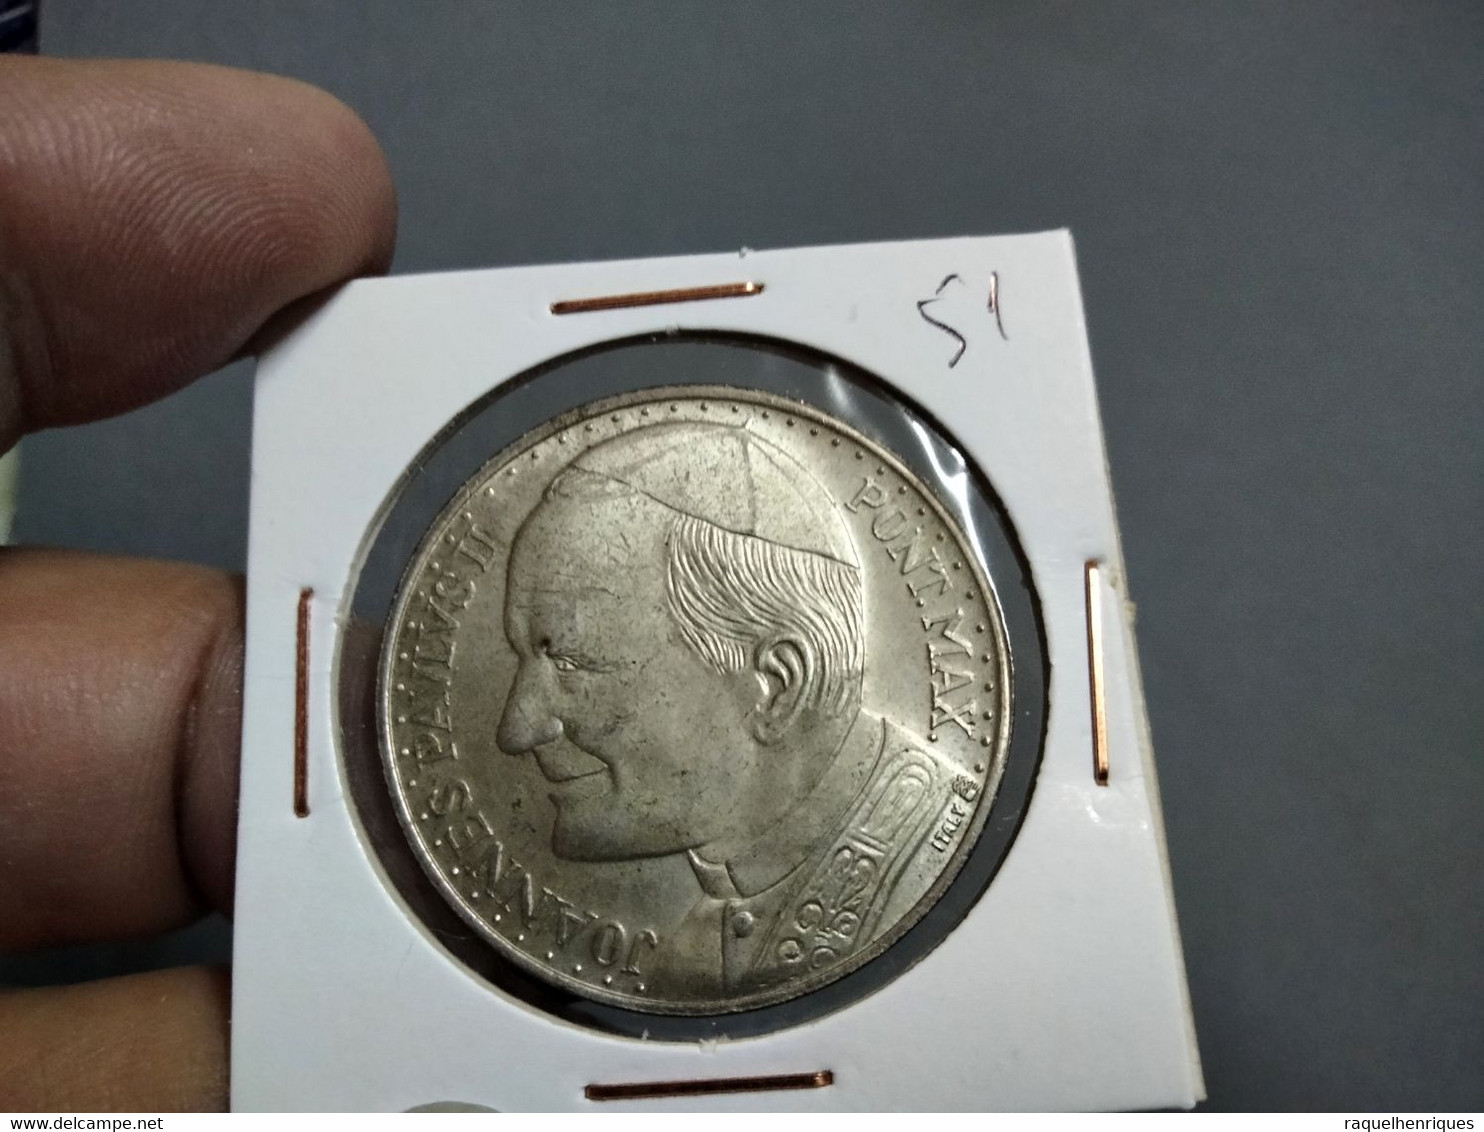 VATICAN MEDAL - Pope John Paul II Catholic Medal - SILVER (G#24-51) - Monarquía/ Nobleza